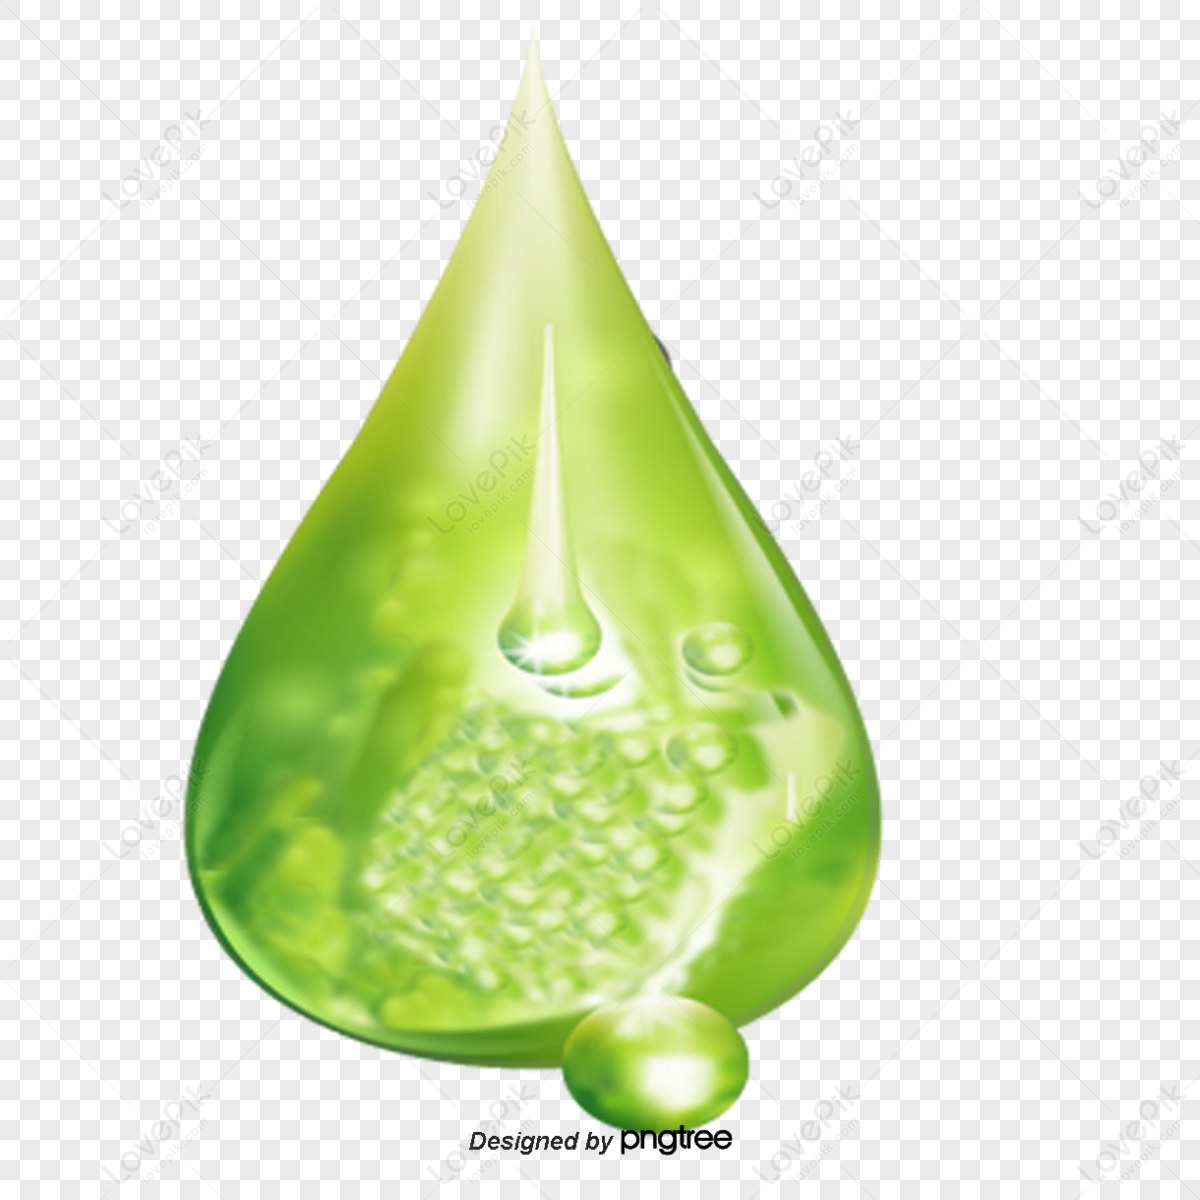 Oil Droplets PNG Transparent Images Free Download, Vector Files